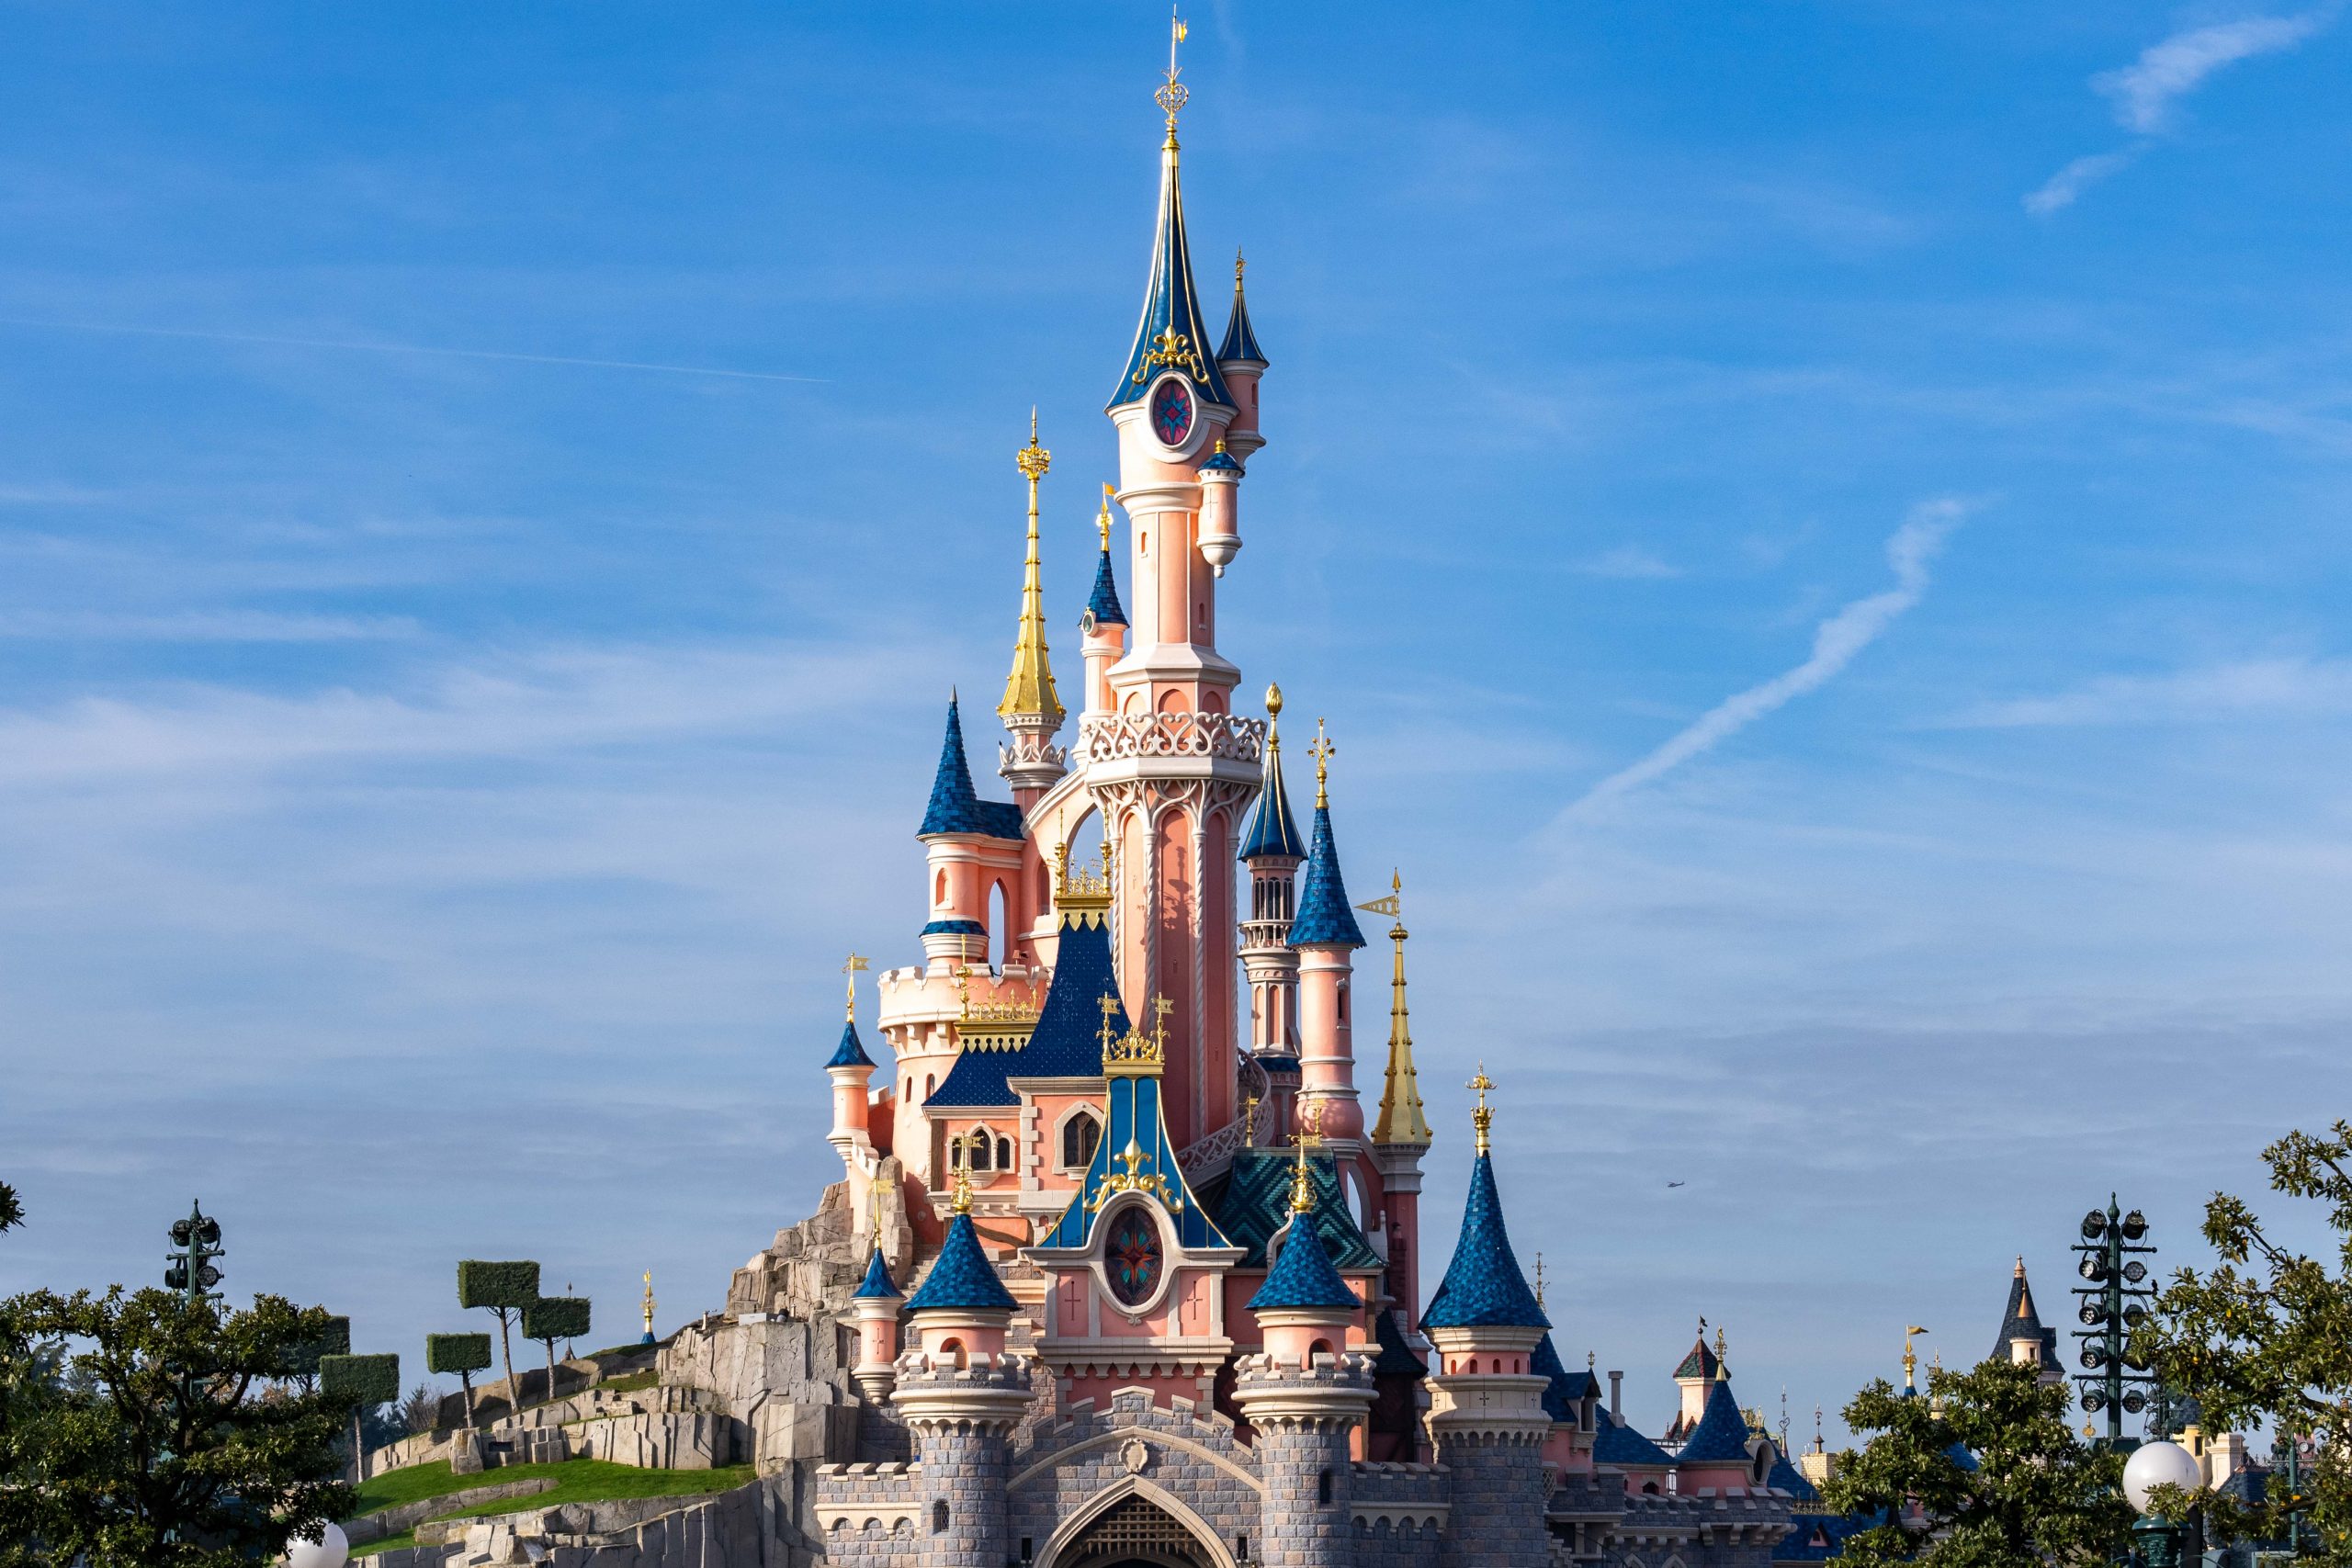 Sleeping Beauty Castle, Disneyland Paris/Disneyland Paris News